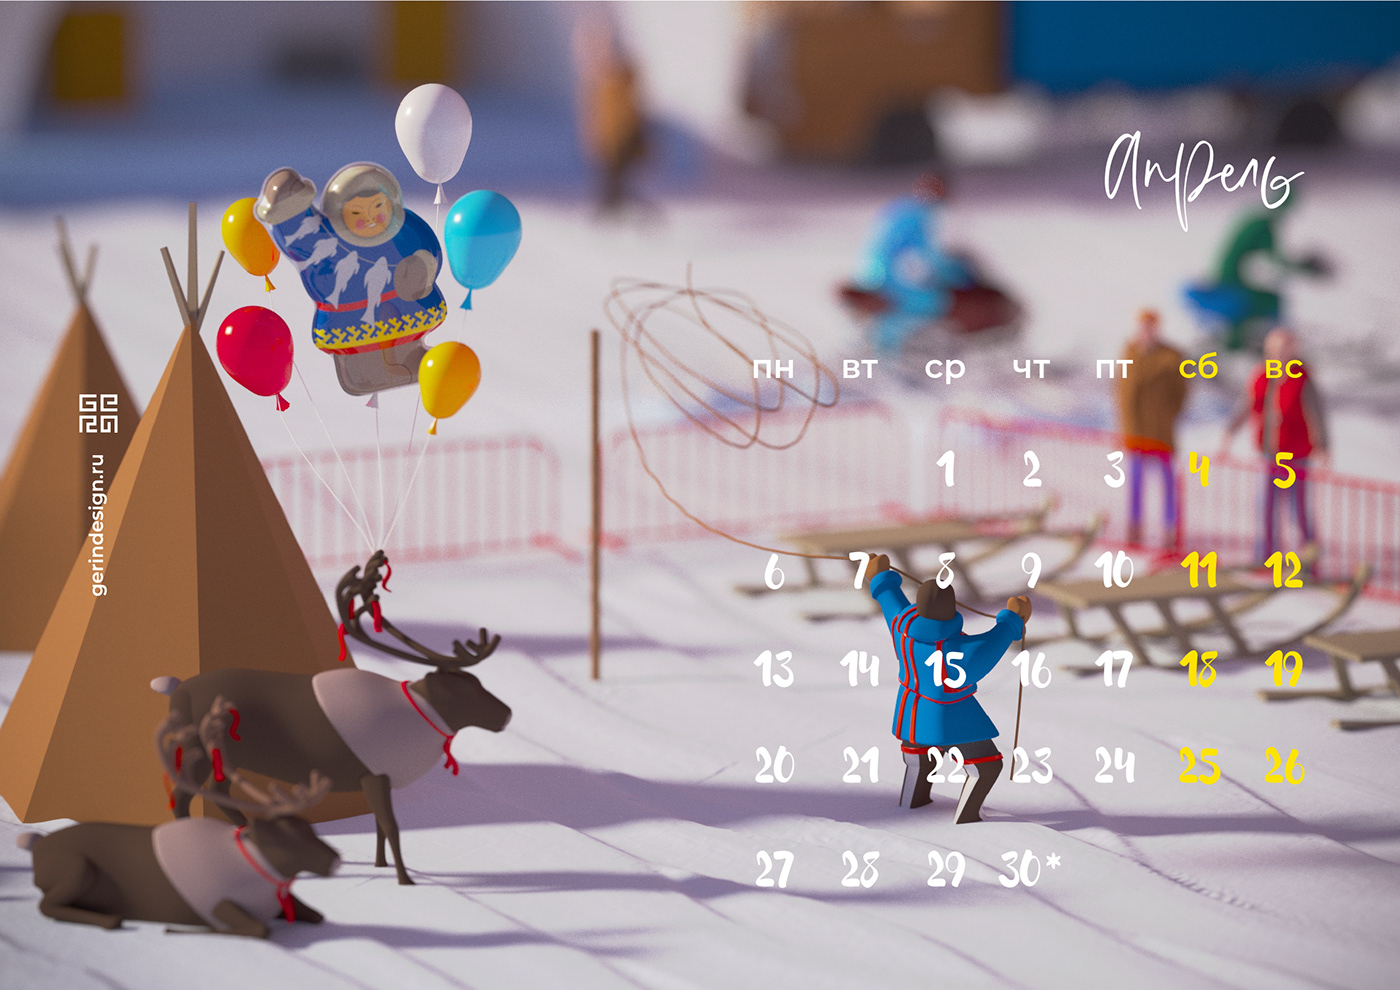 Calendar-2020 Yamal 3D gerindesign.ru cloudberry DEERS Arctic Great Bear Tambourine